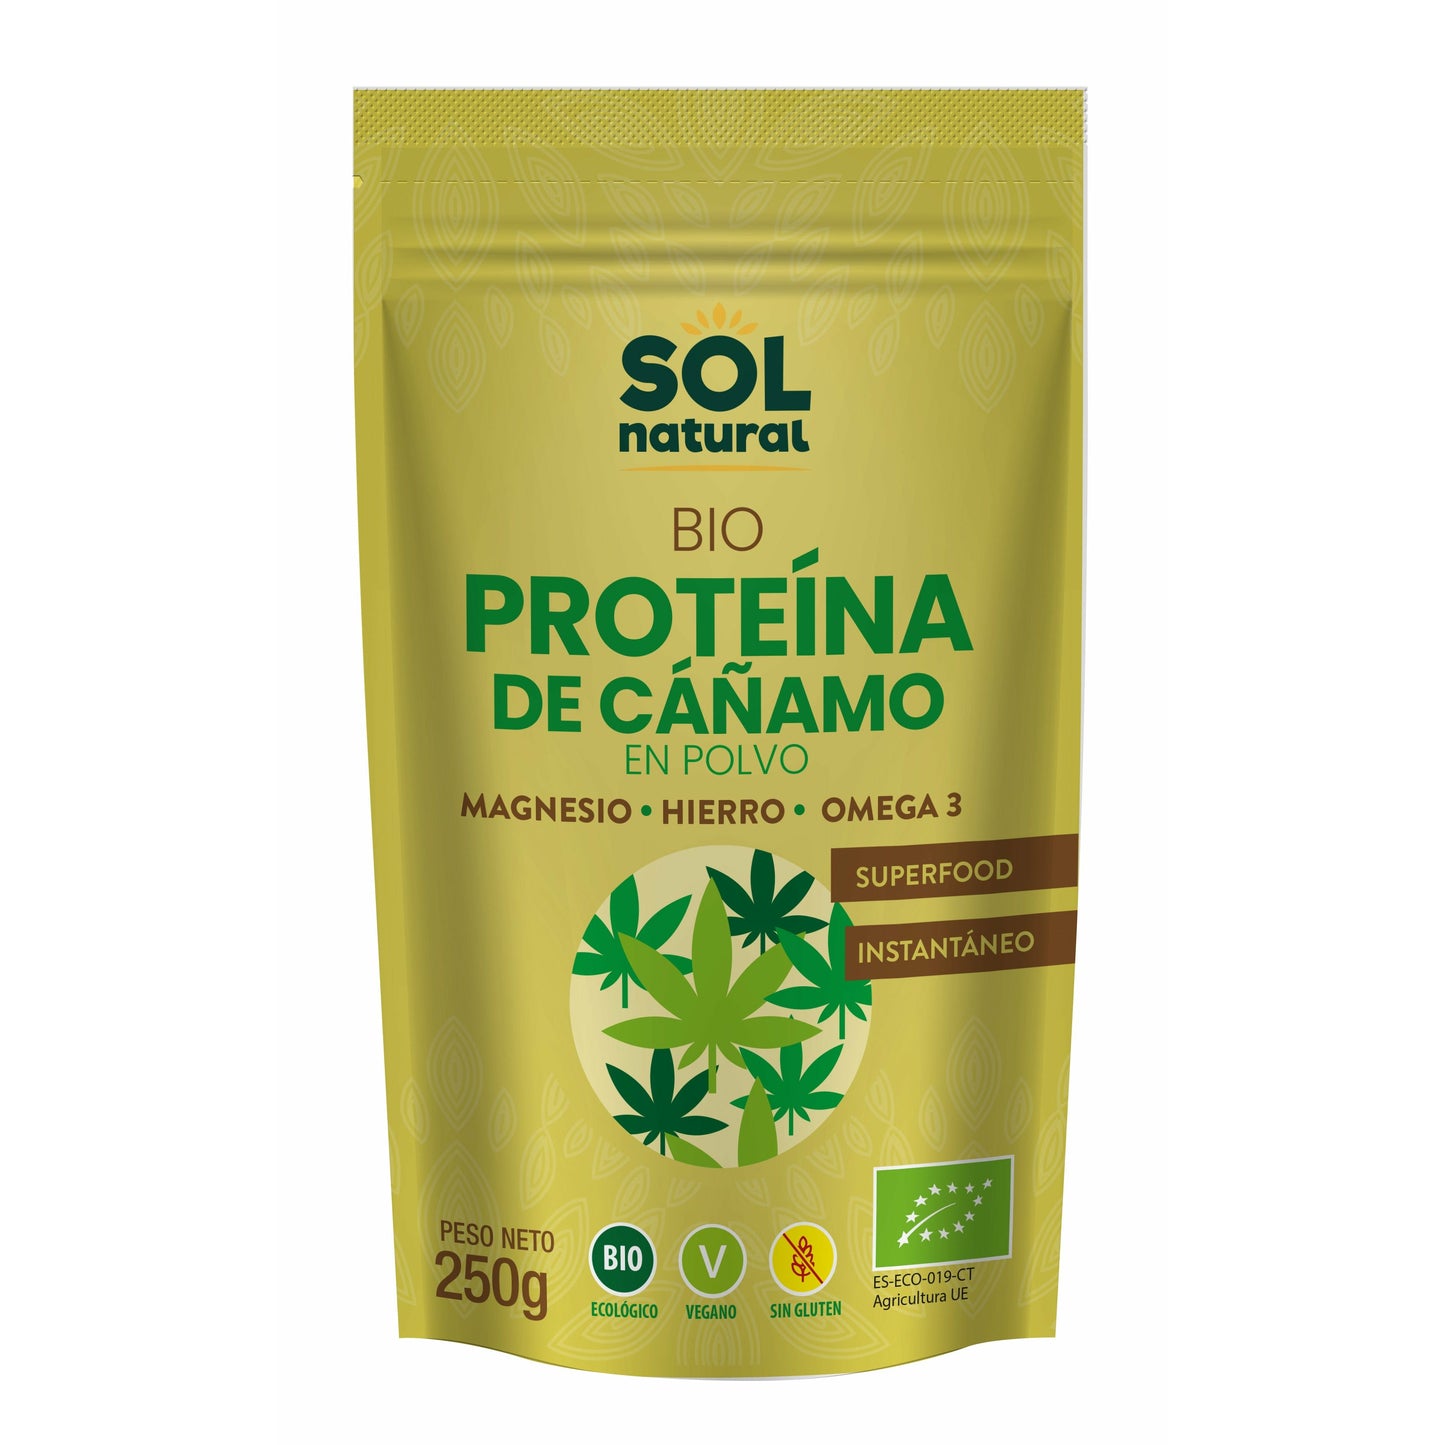 Proteina de Cañamo Bio 250 gr | Sol Natural - Dietetica Ferrer